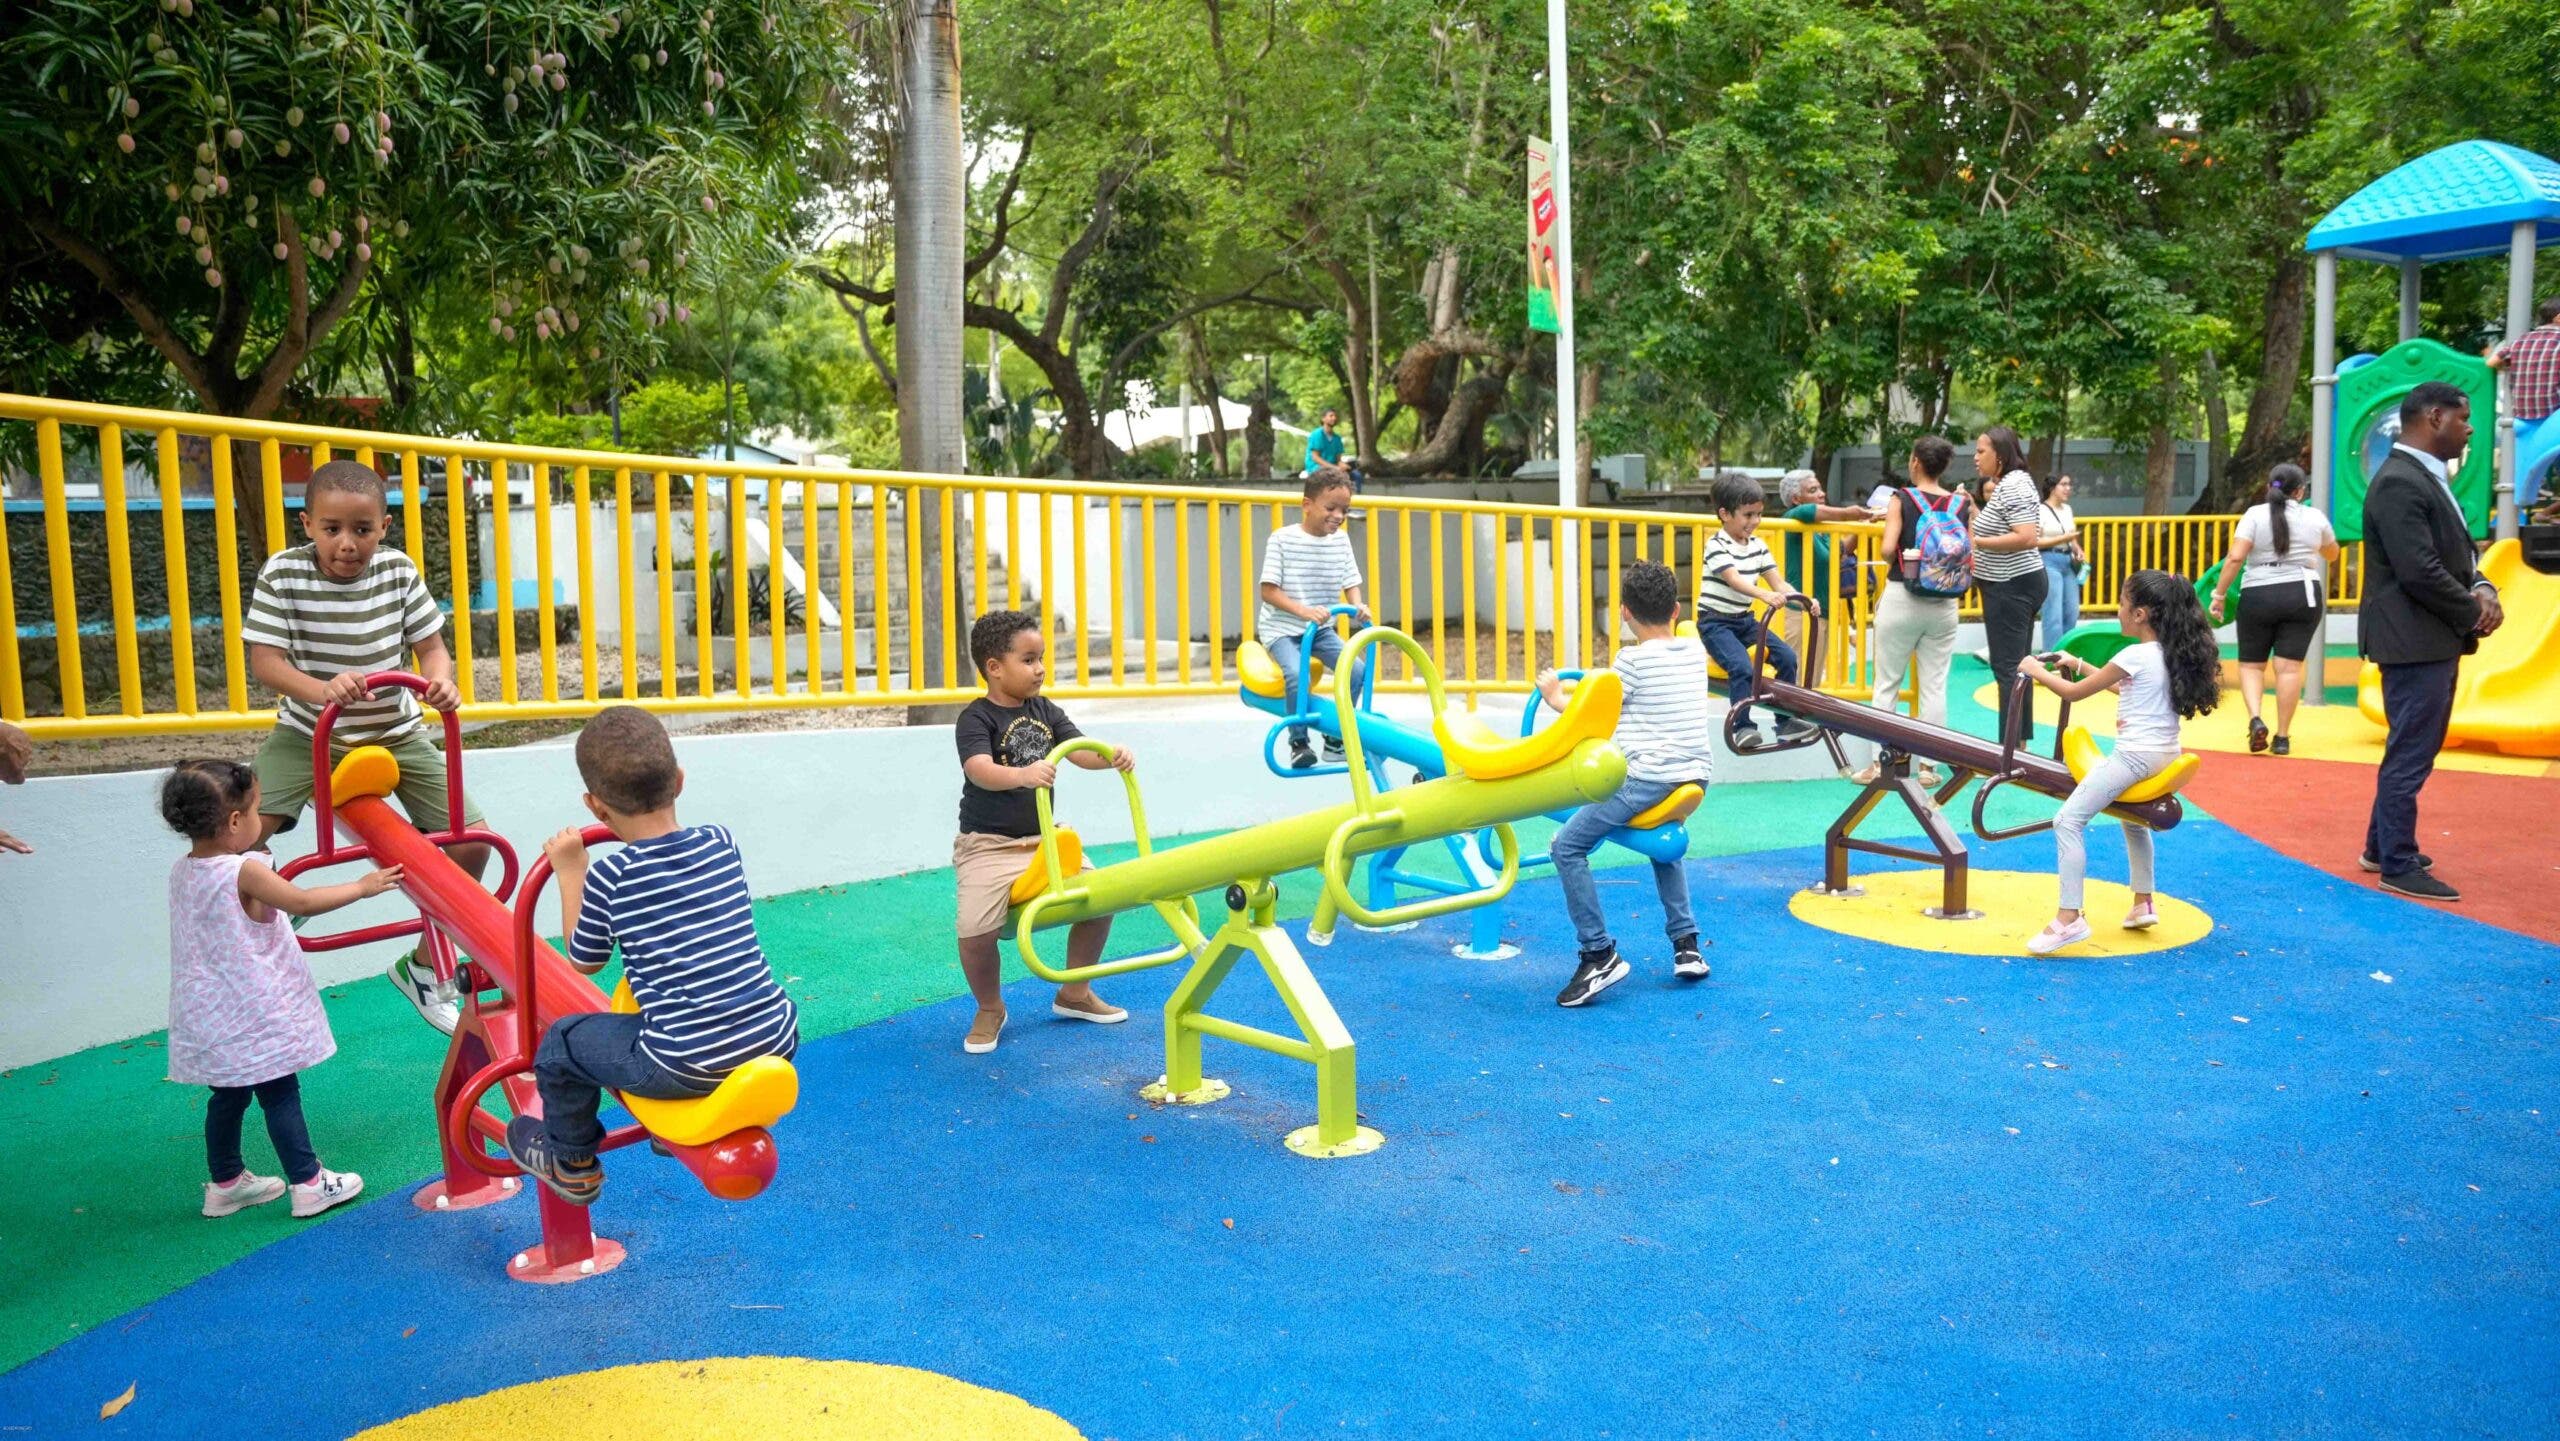 Ministerio de Cultura y Grupo SID inauguran Parque Infantil Plaza de la Cultura